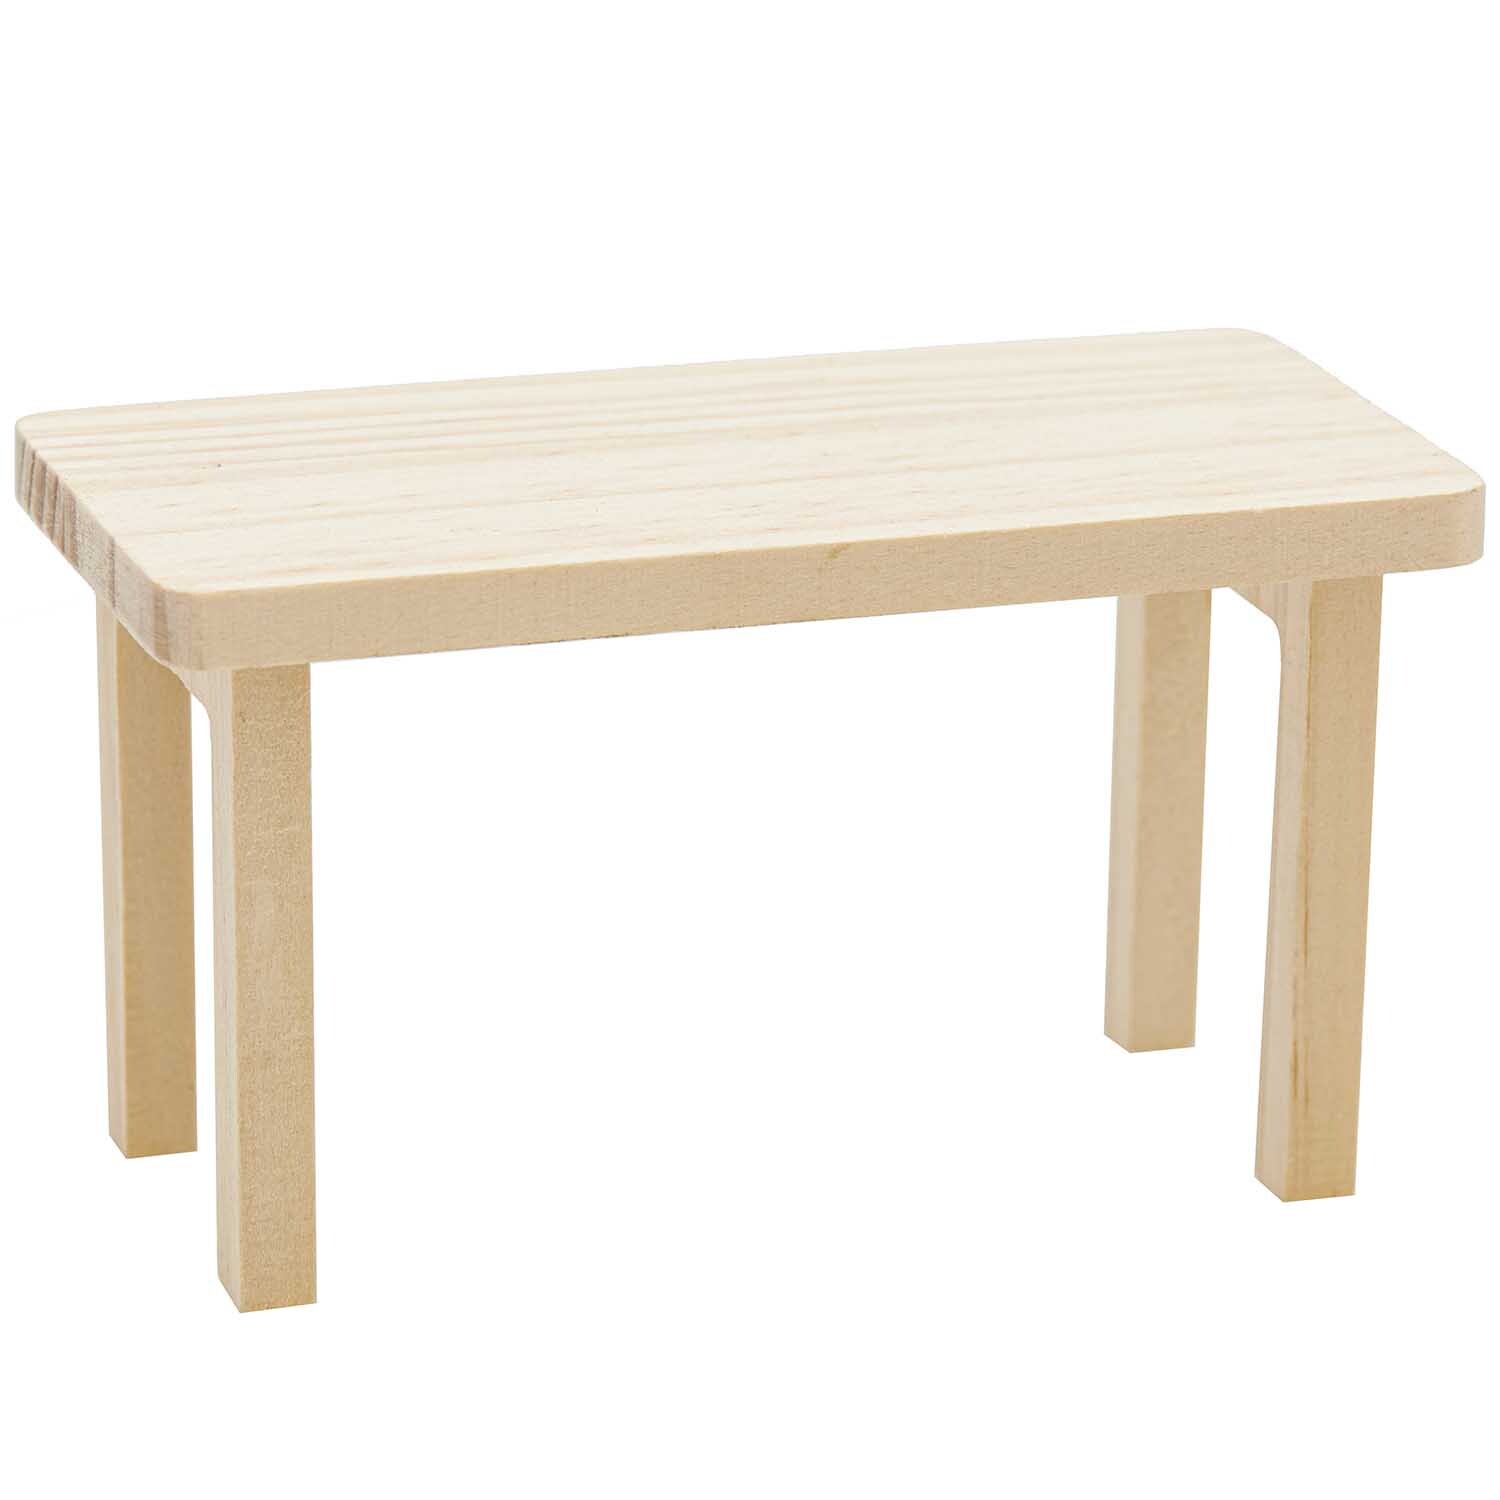 Miniatur Tisch rechteckig 12x6x6,5cm